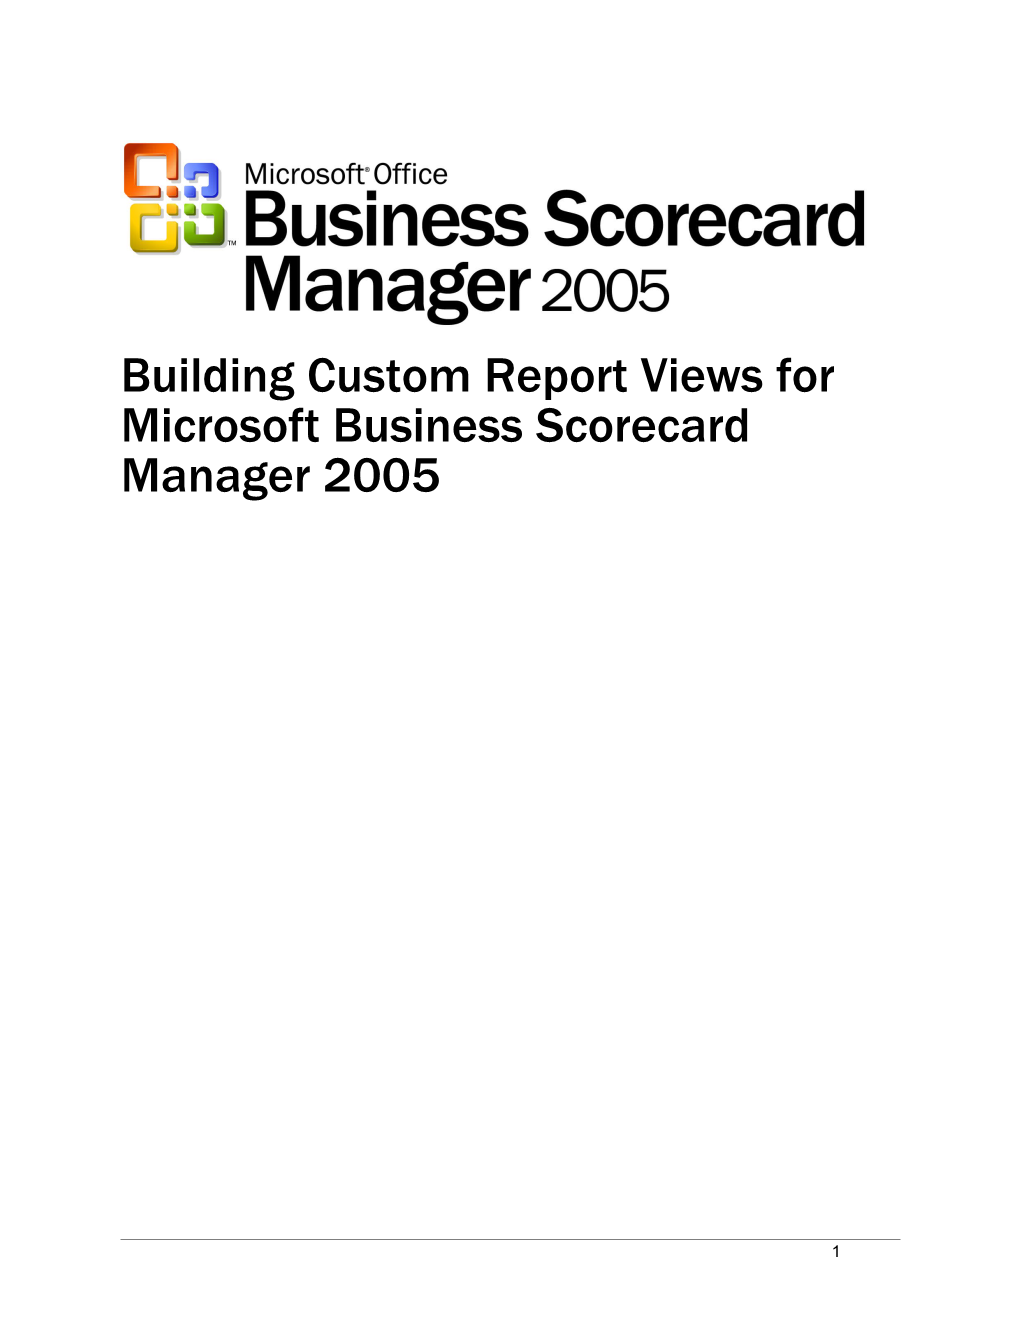 Building Custom Report Views for Microsoft Business Scorecard Manager 2005